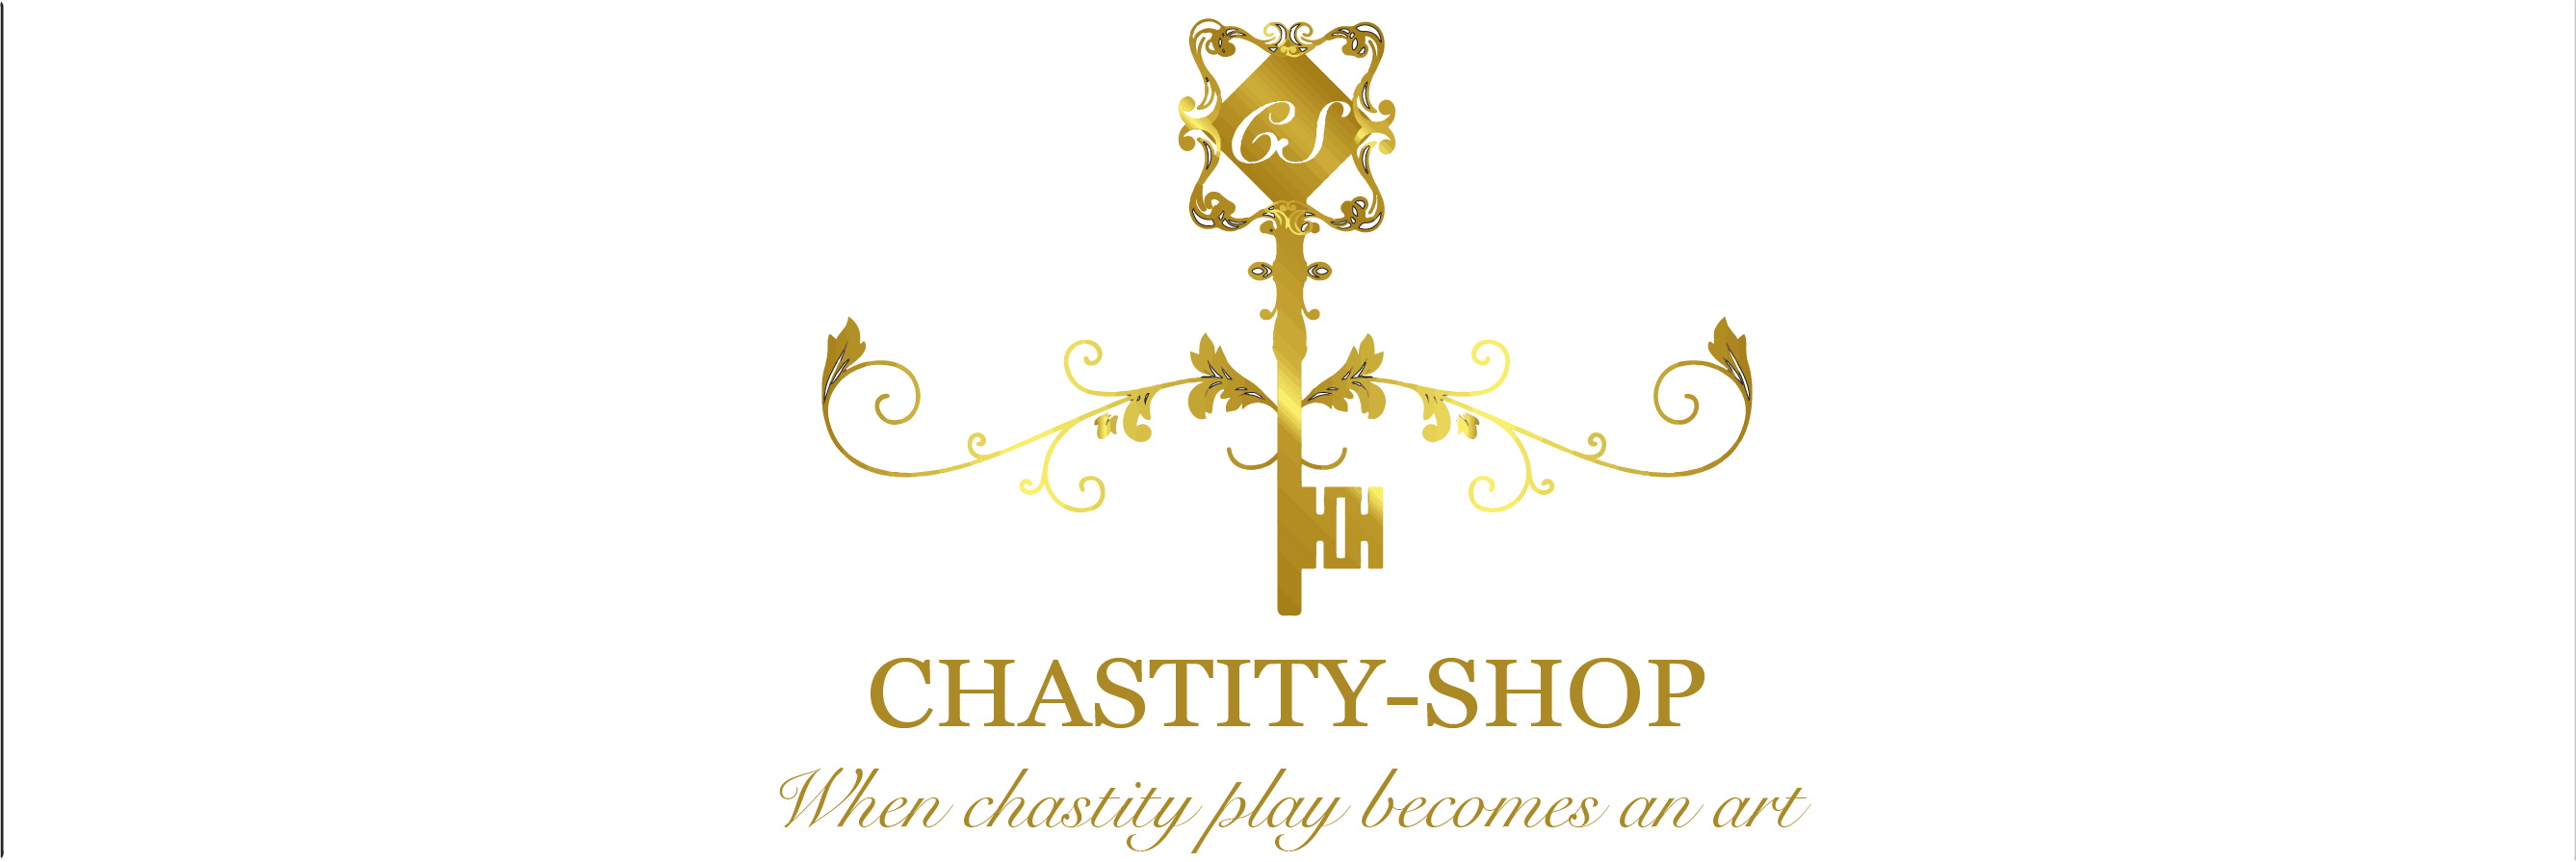 chastity-shop